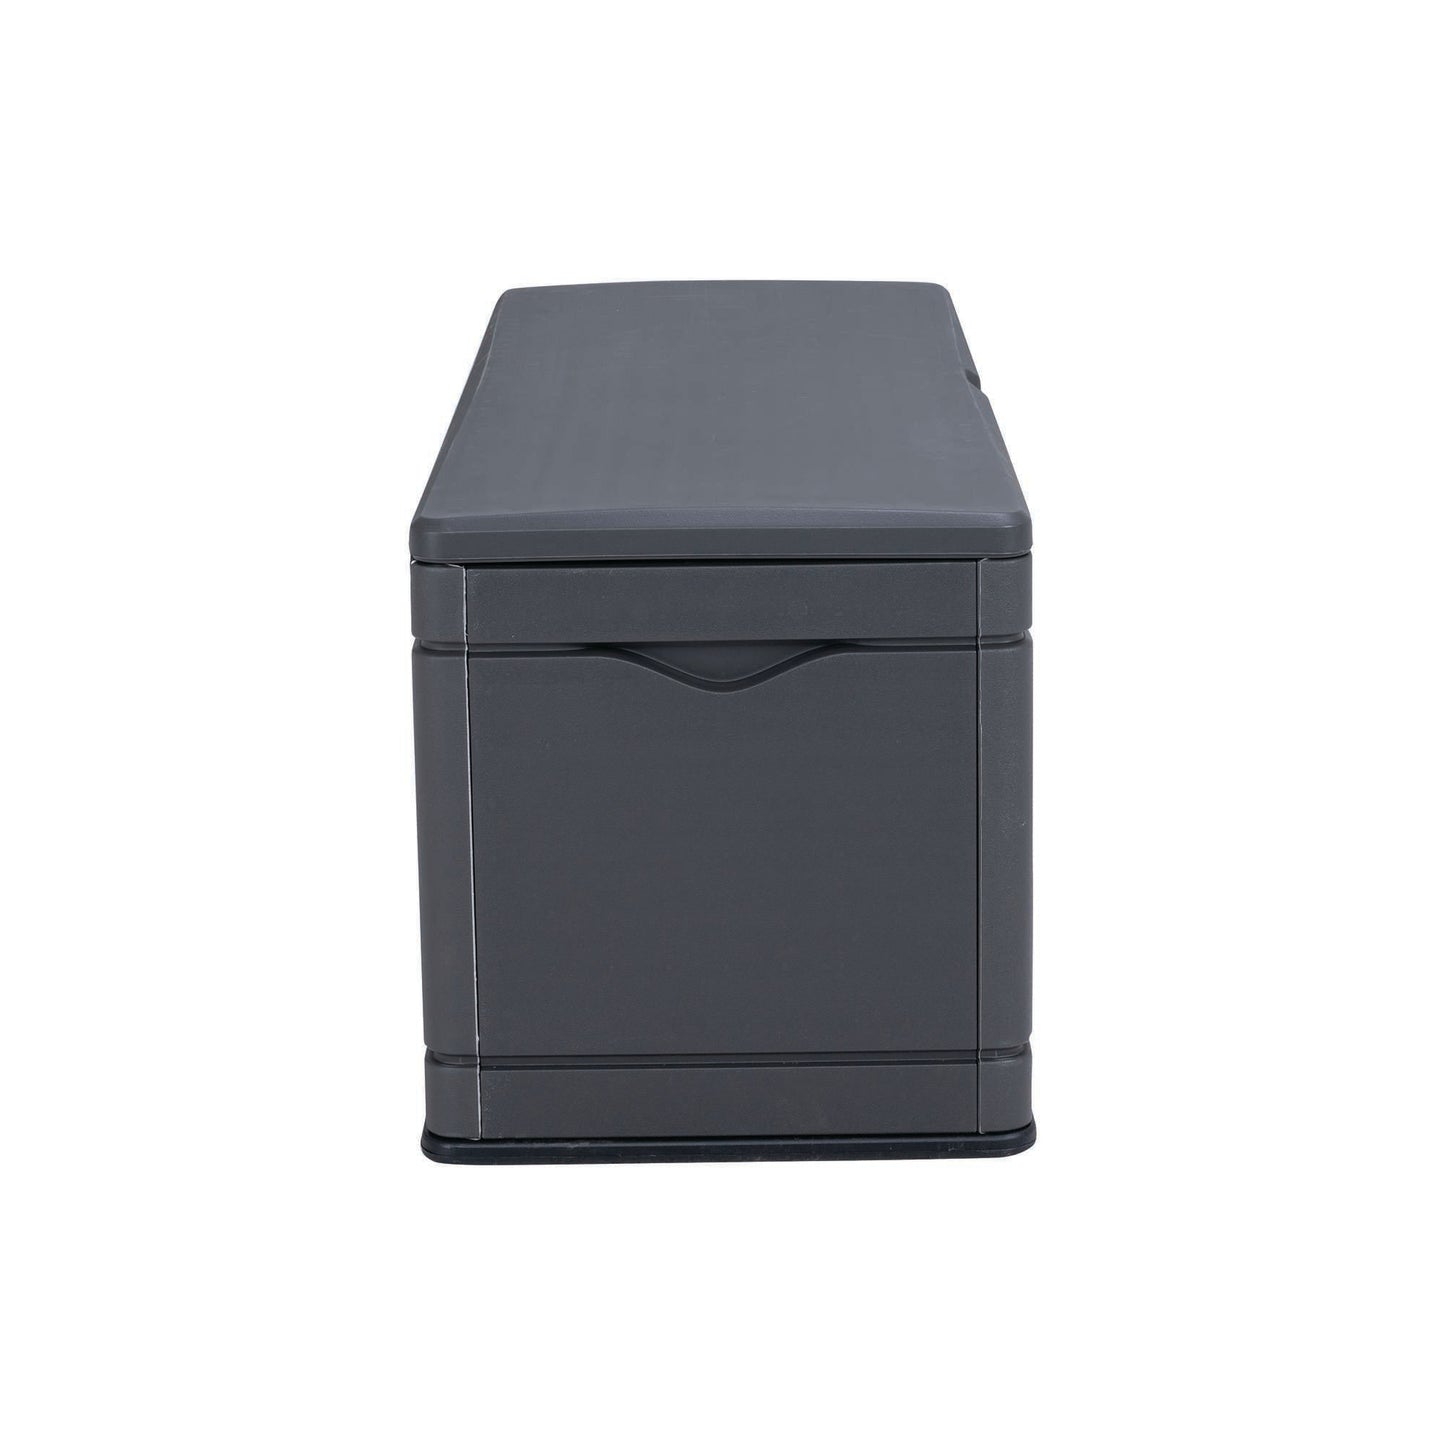 Lifetime Outdoor Storage Deck Box - 590L